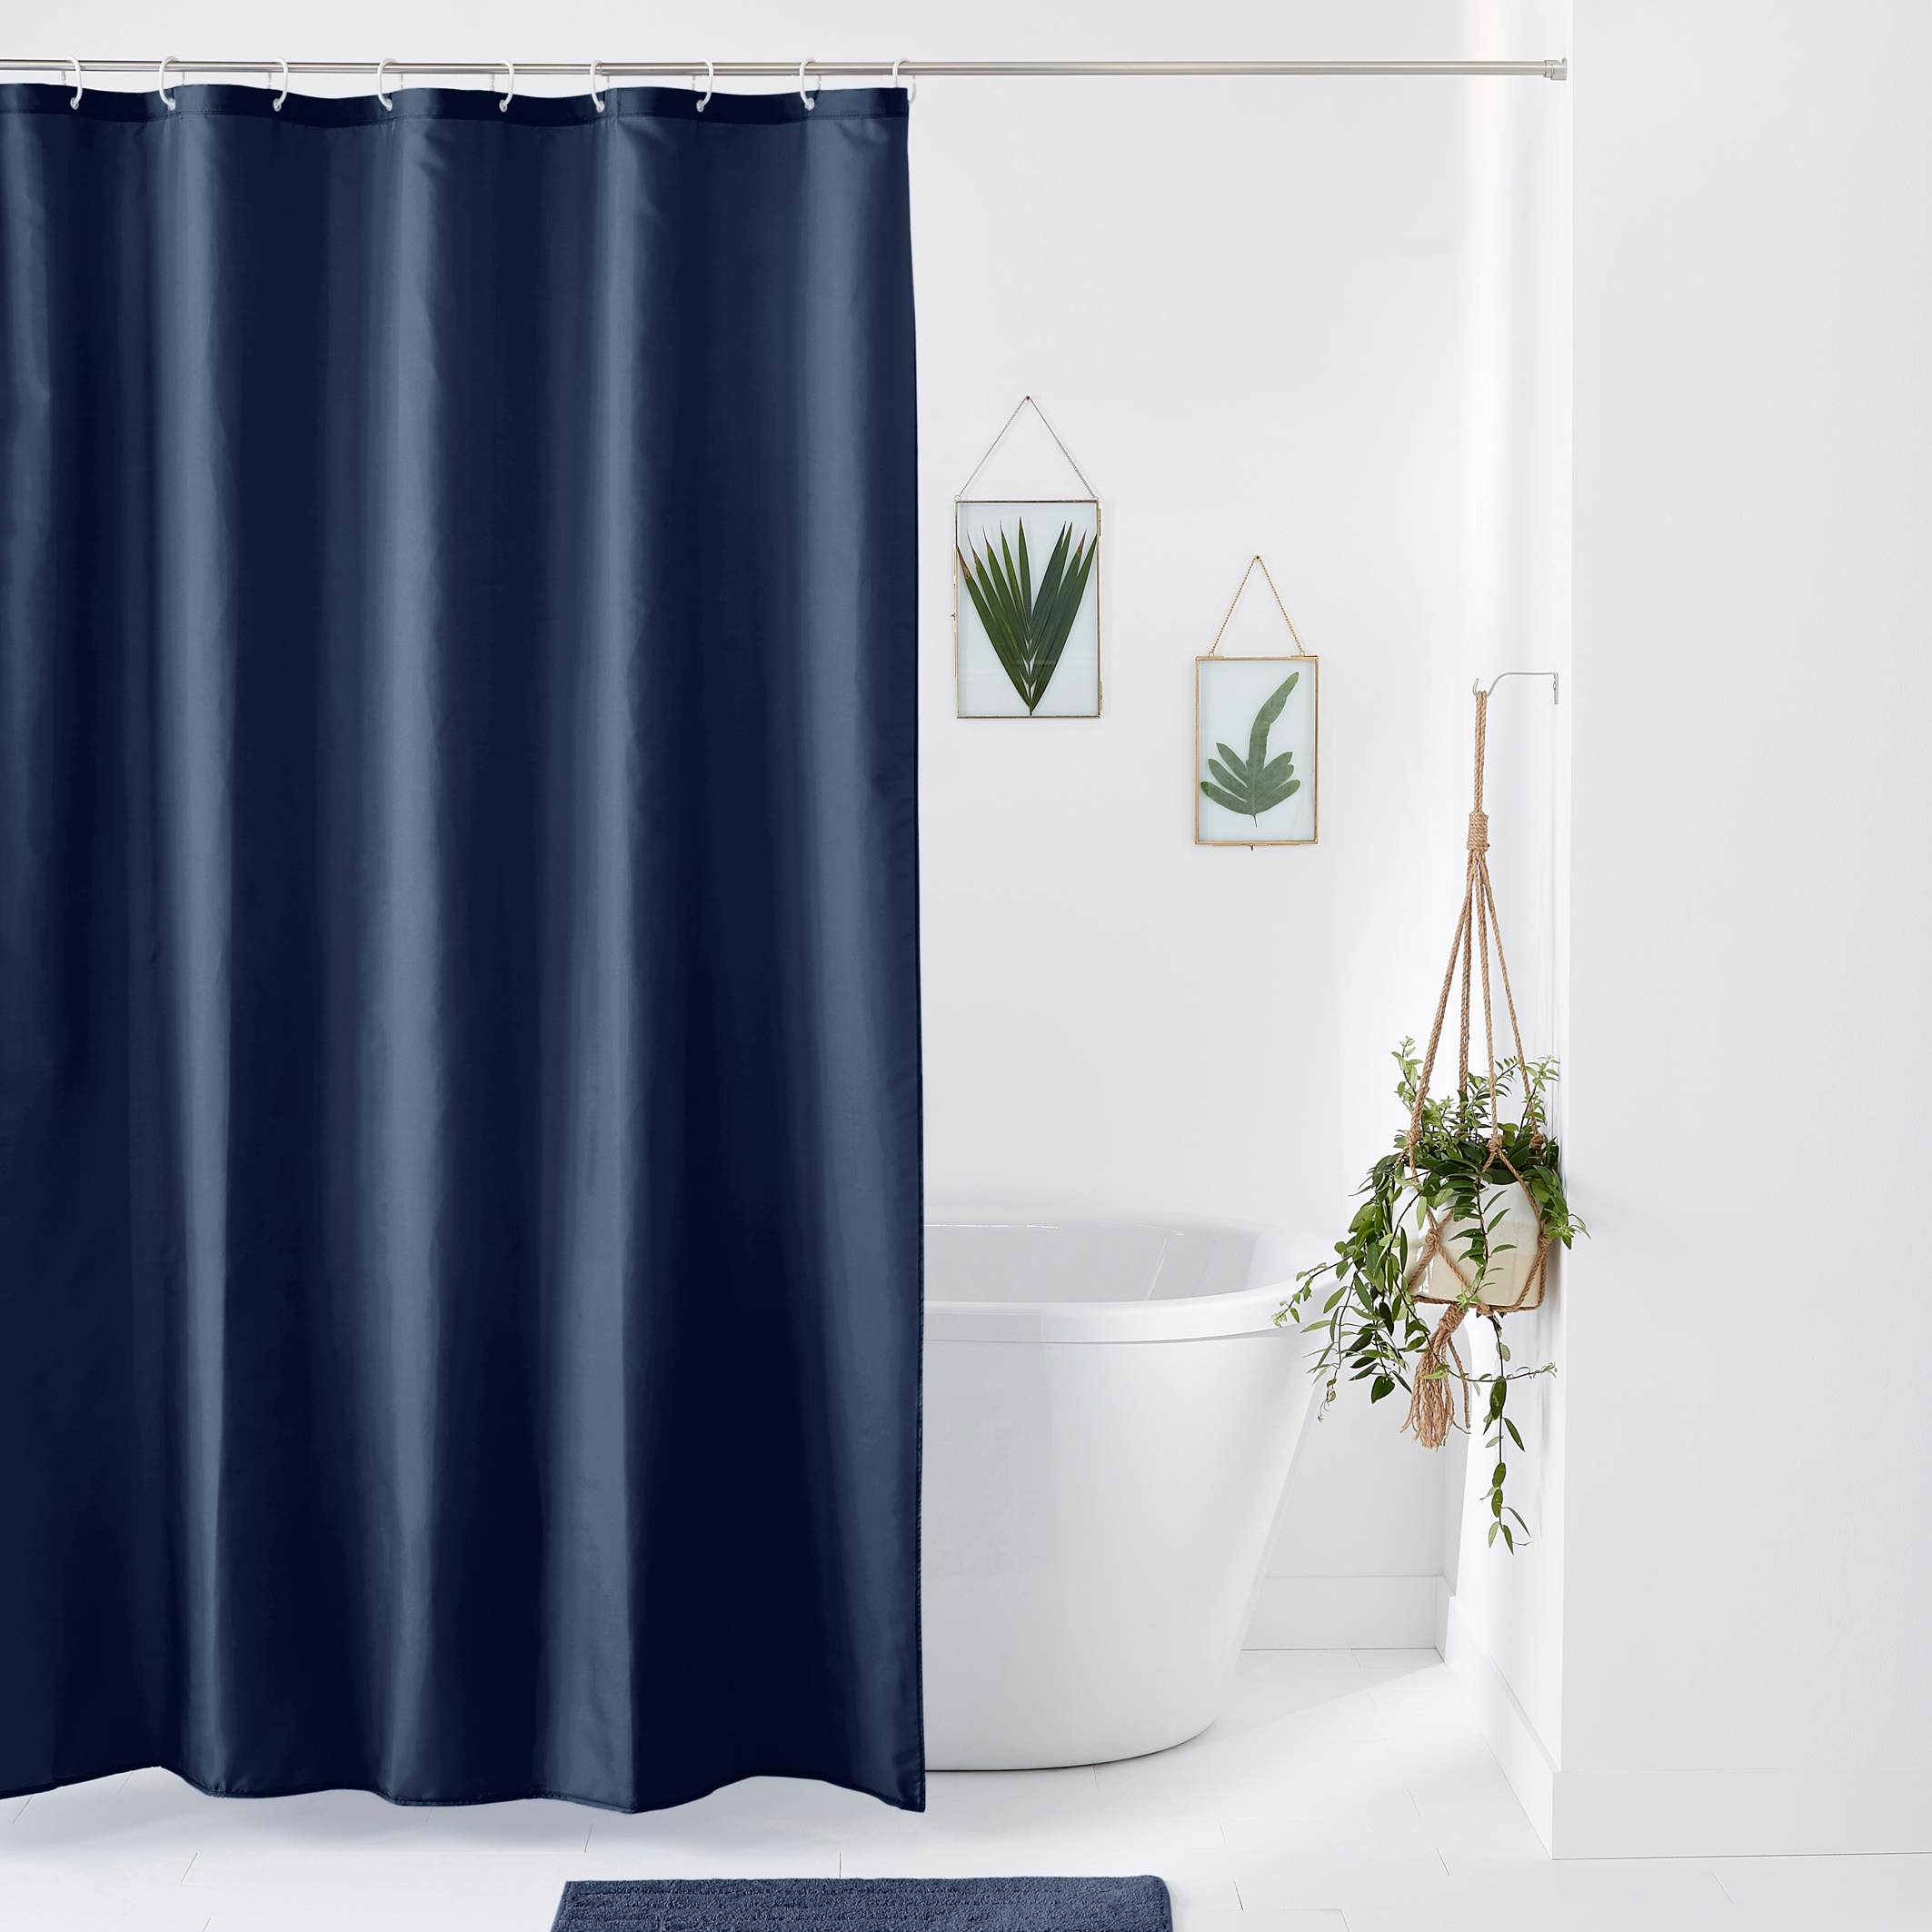 Blue by Other Colour 180cm x 180cm Plain Polyester Shower Curtain Size 